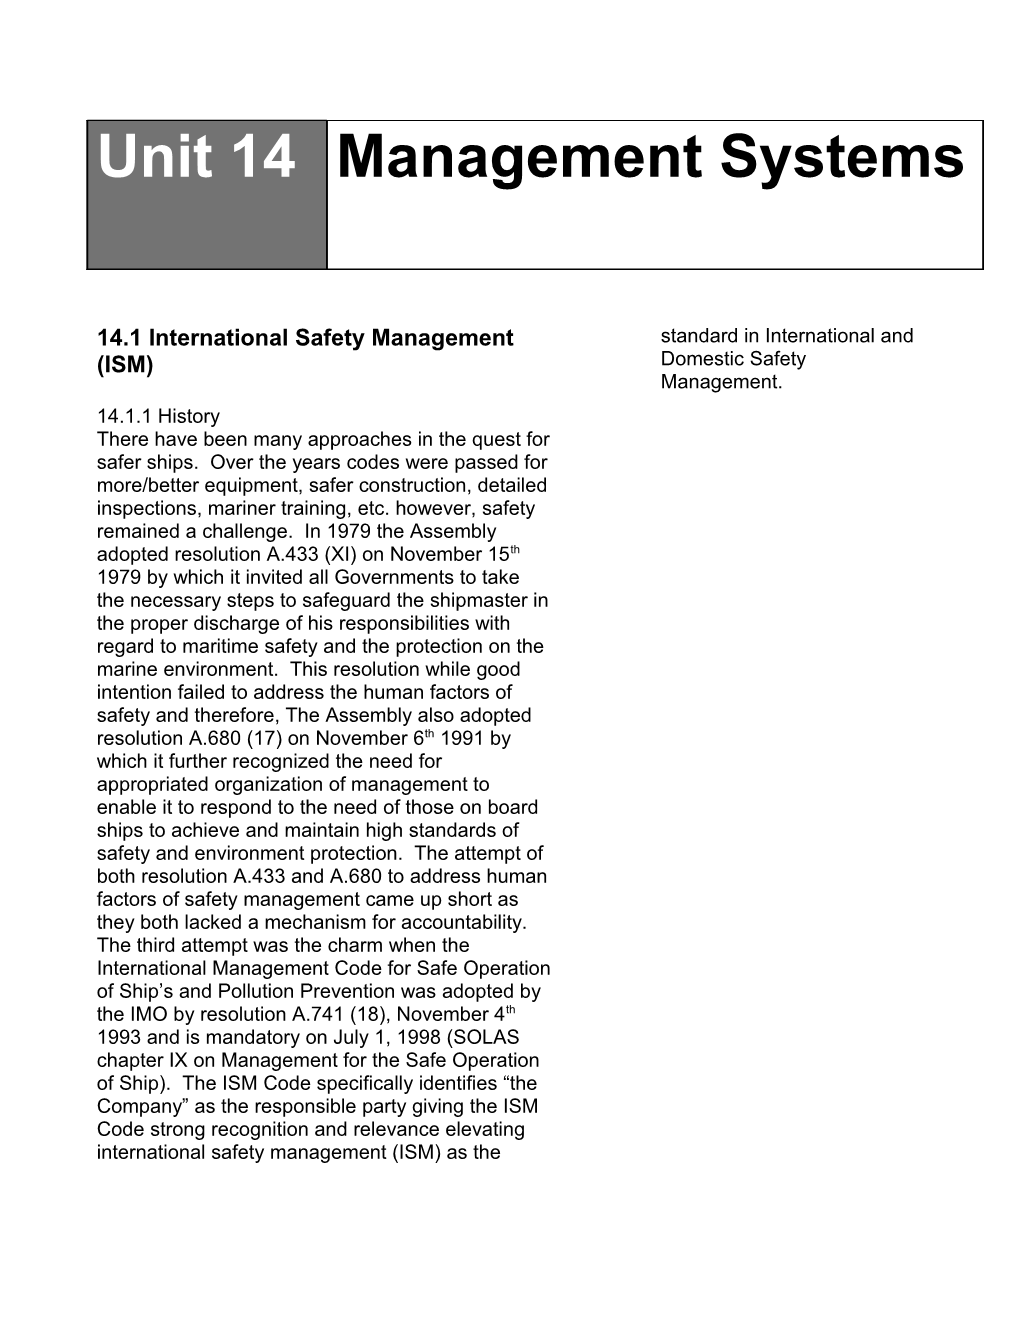 14.1 International Safety Management (ISM)